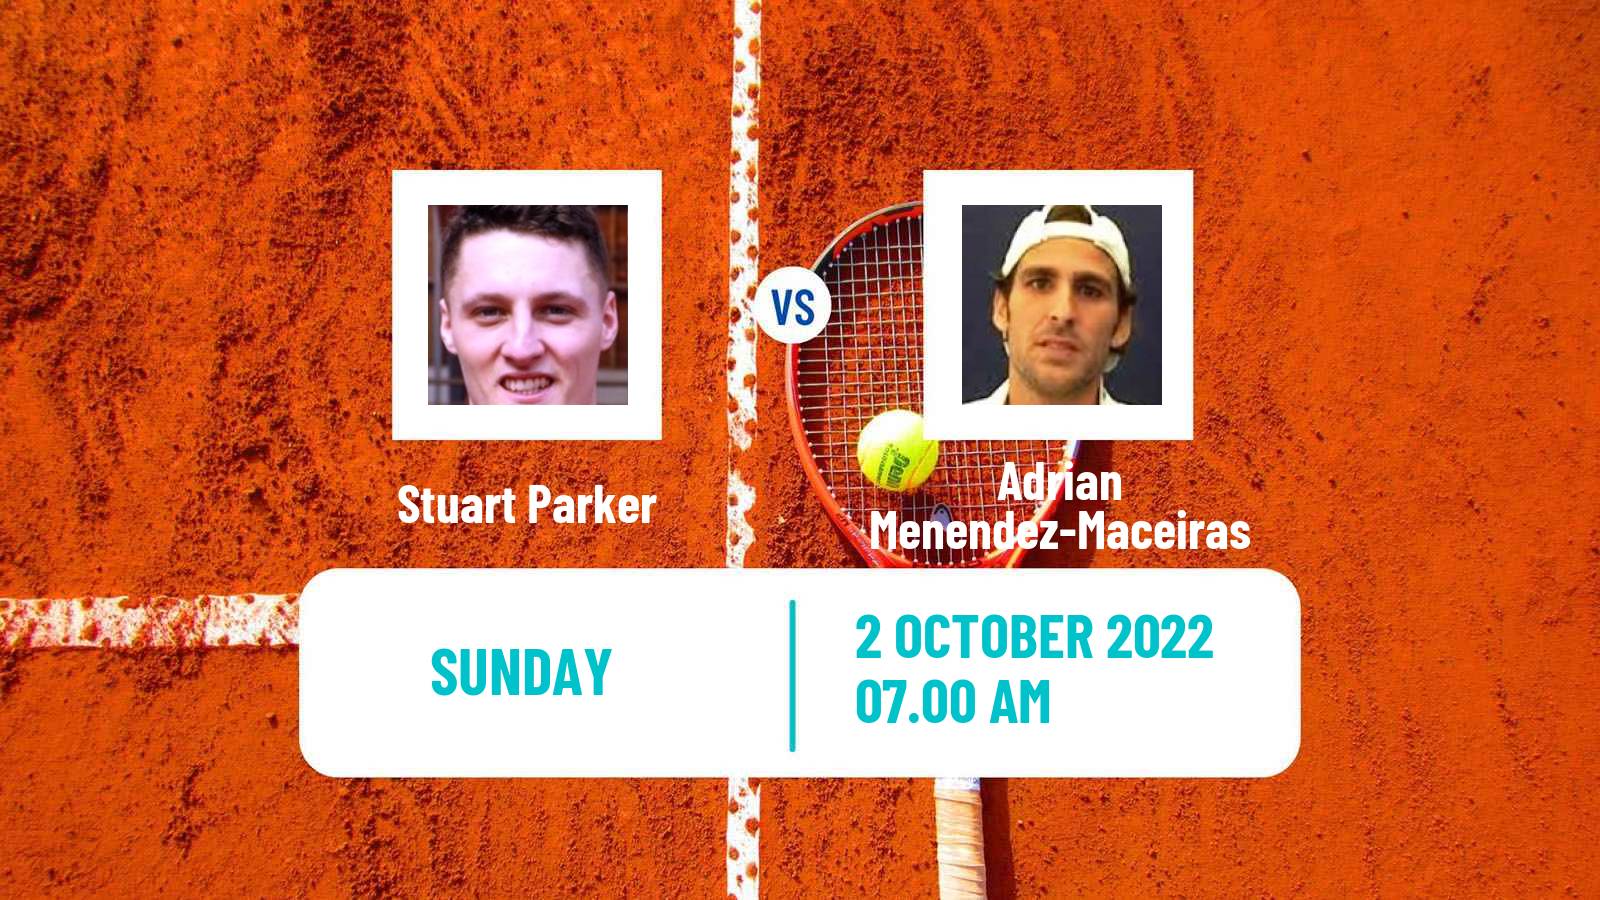 Tennis ATP Challenger Stuart Parker - Adrian Menendez-Maceiras